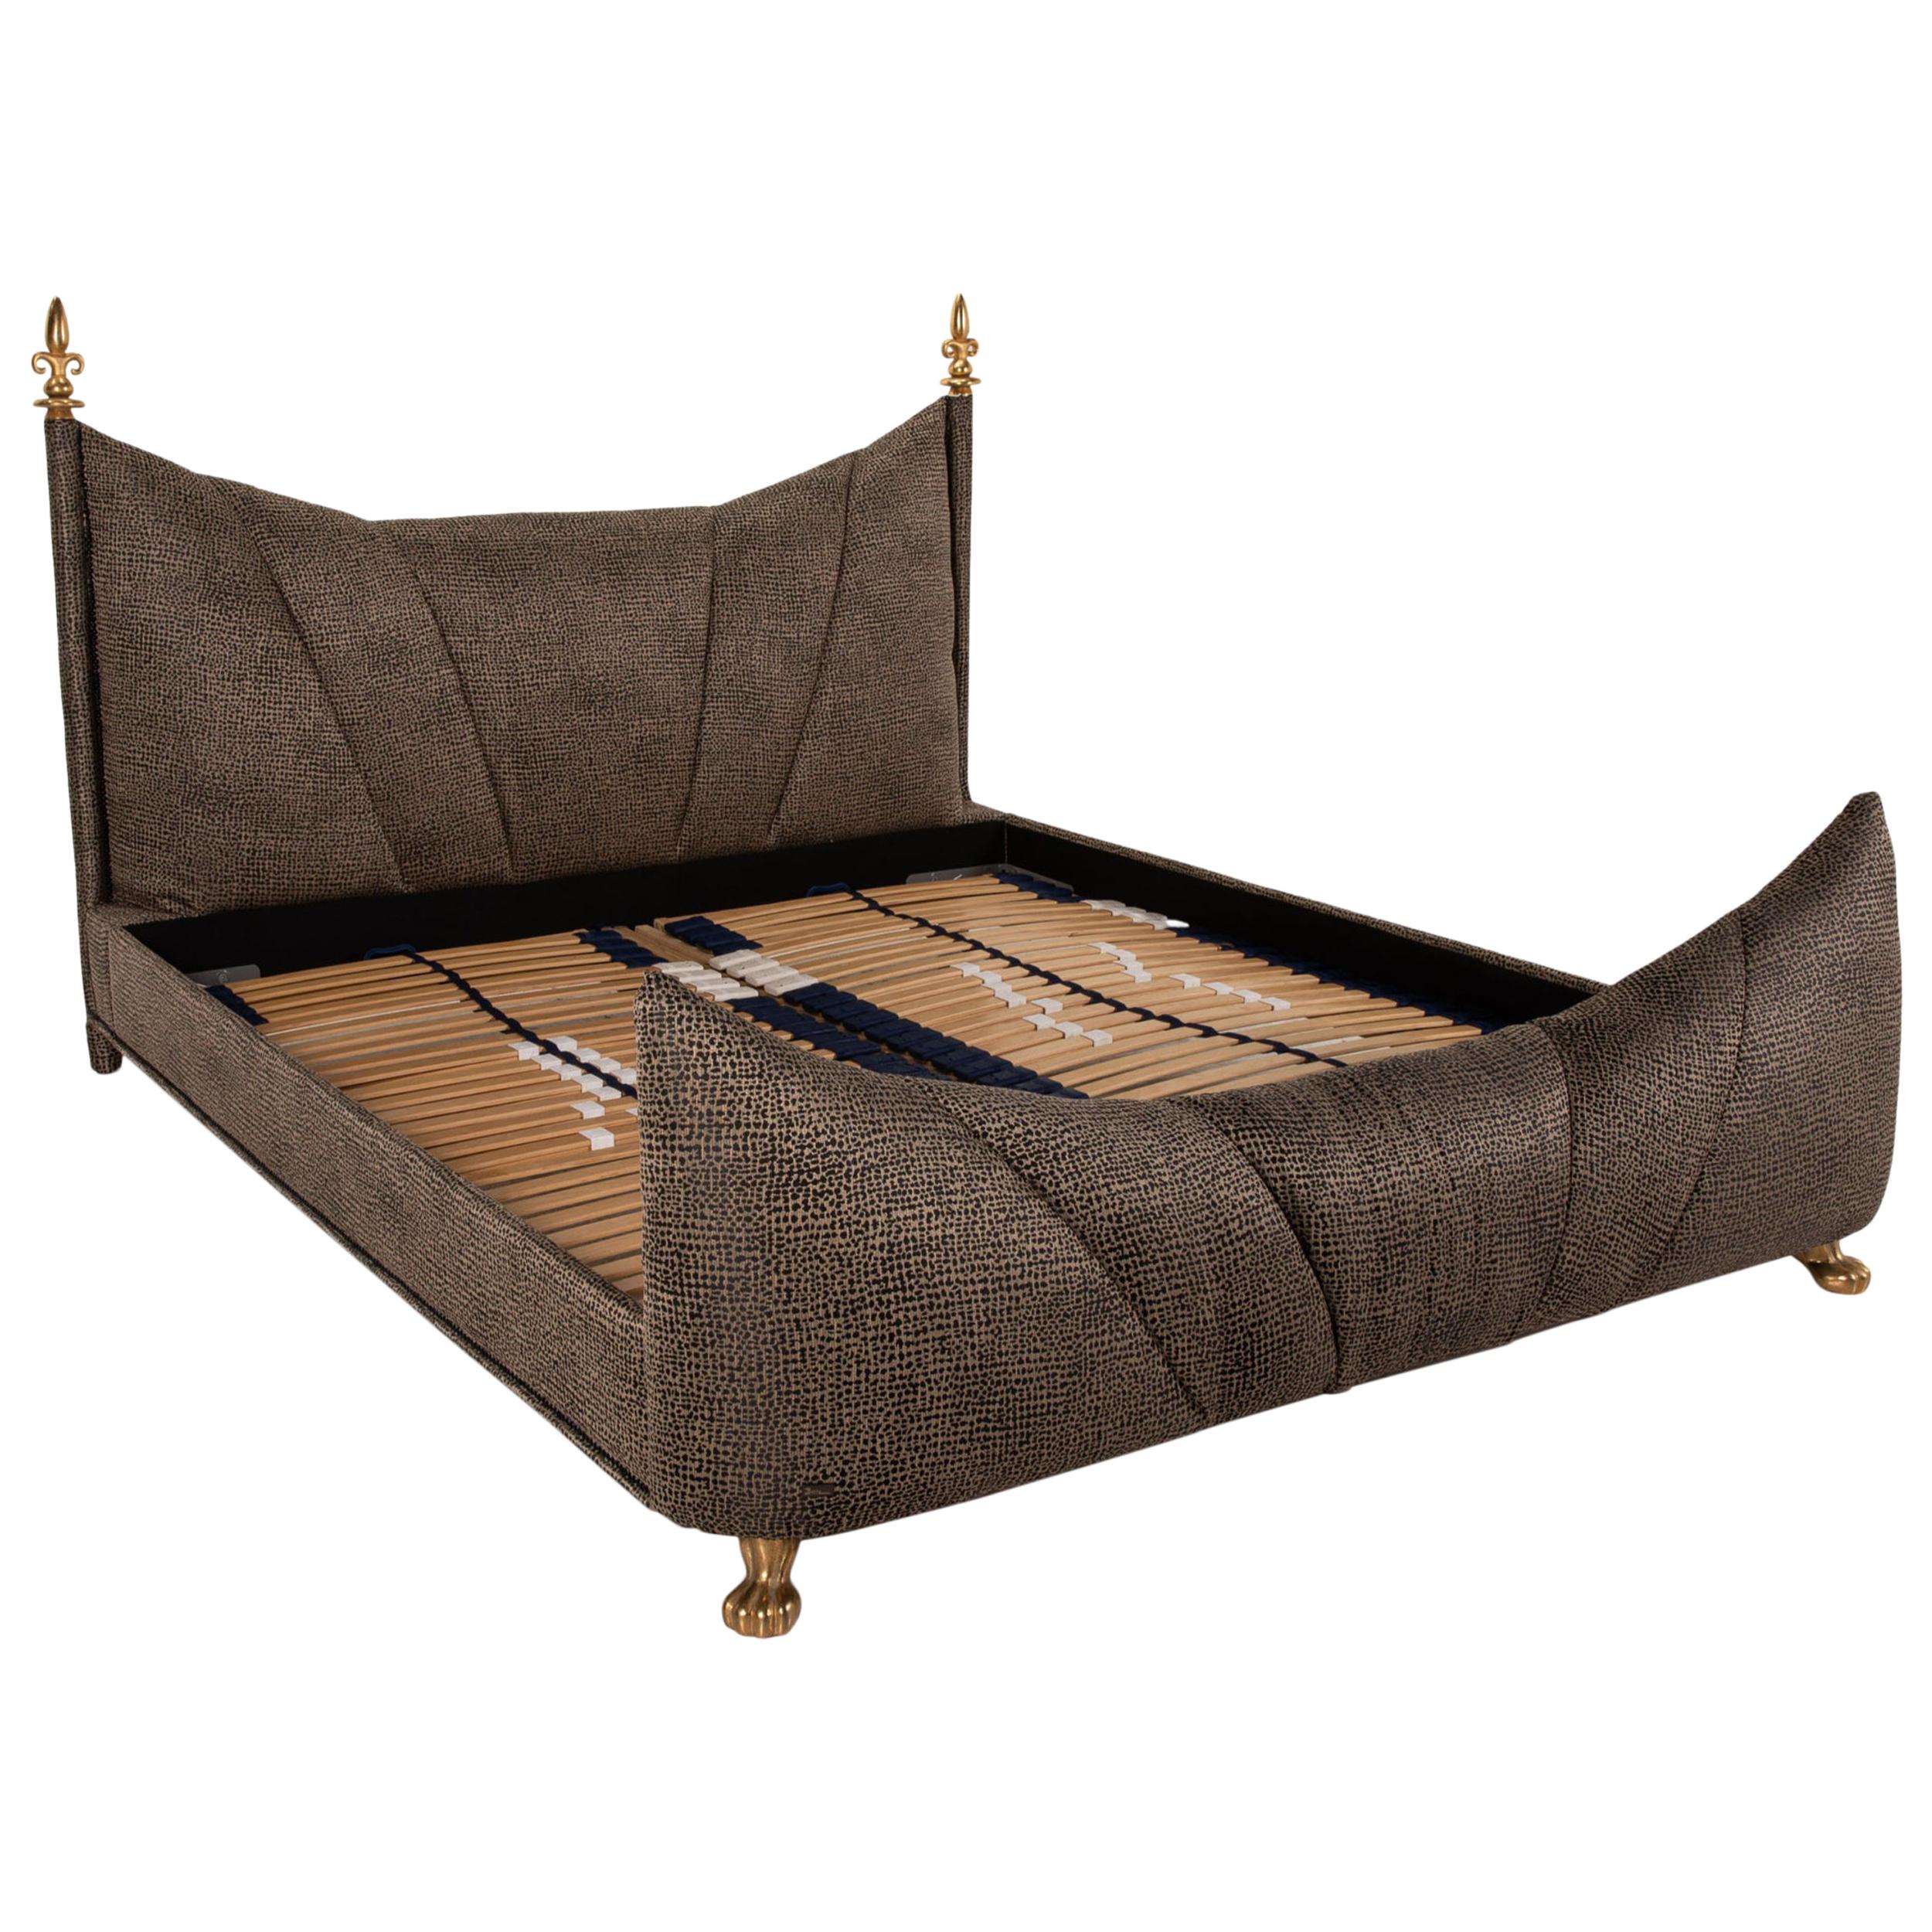 Bretz Ali Baba Velvet Bed Brown Double Bed For Sale